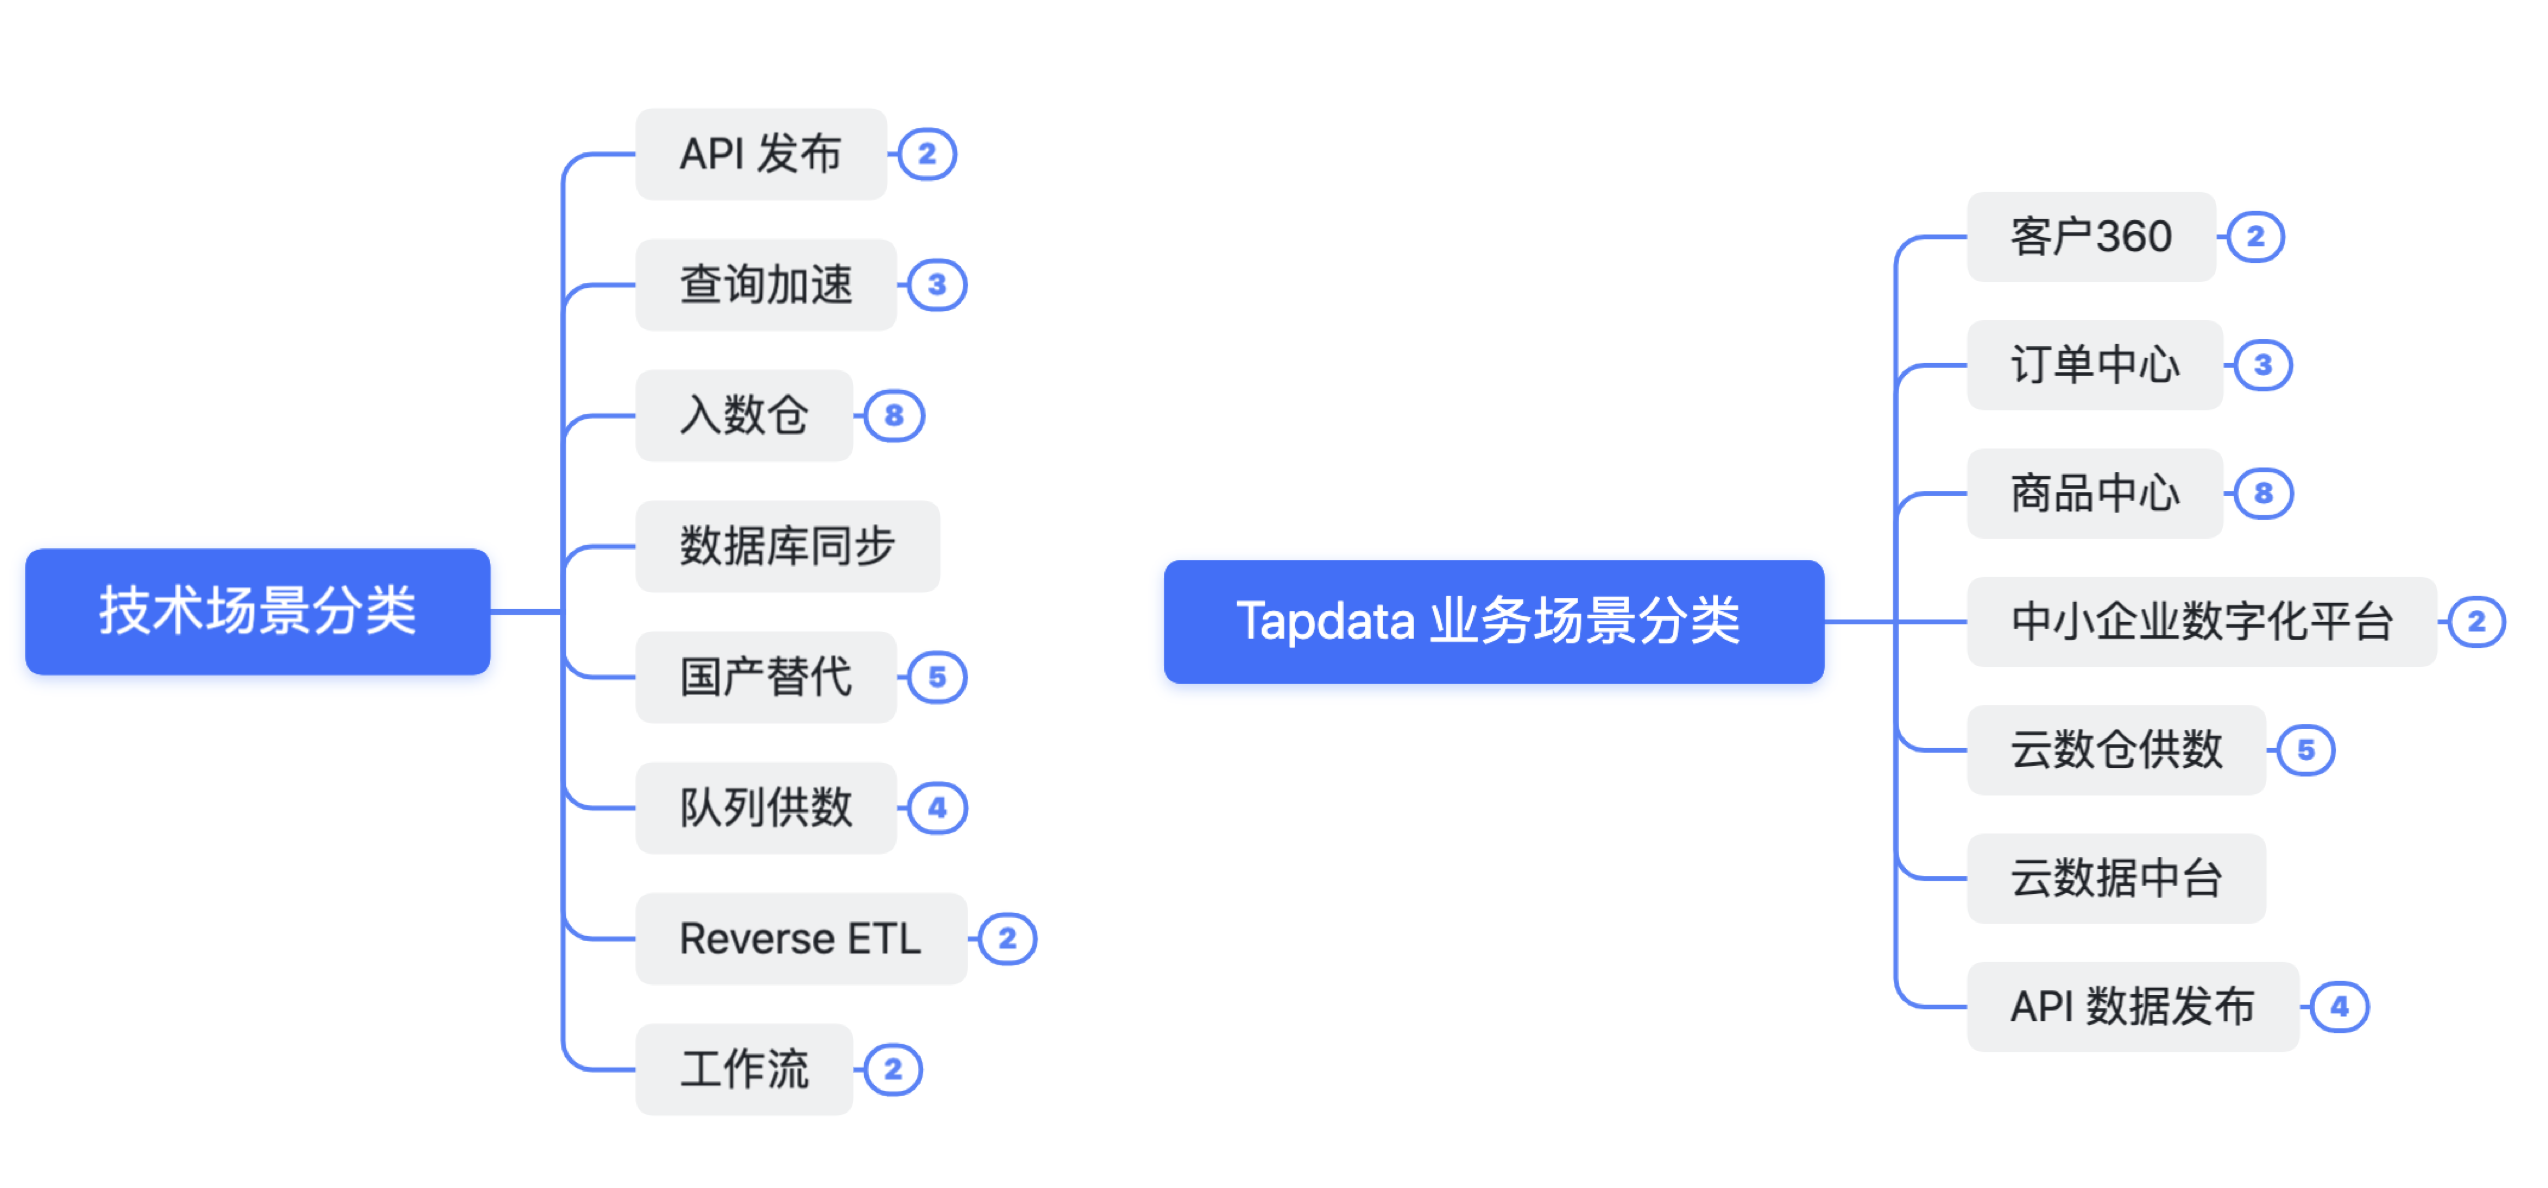 Tapdata 应用场景一览